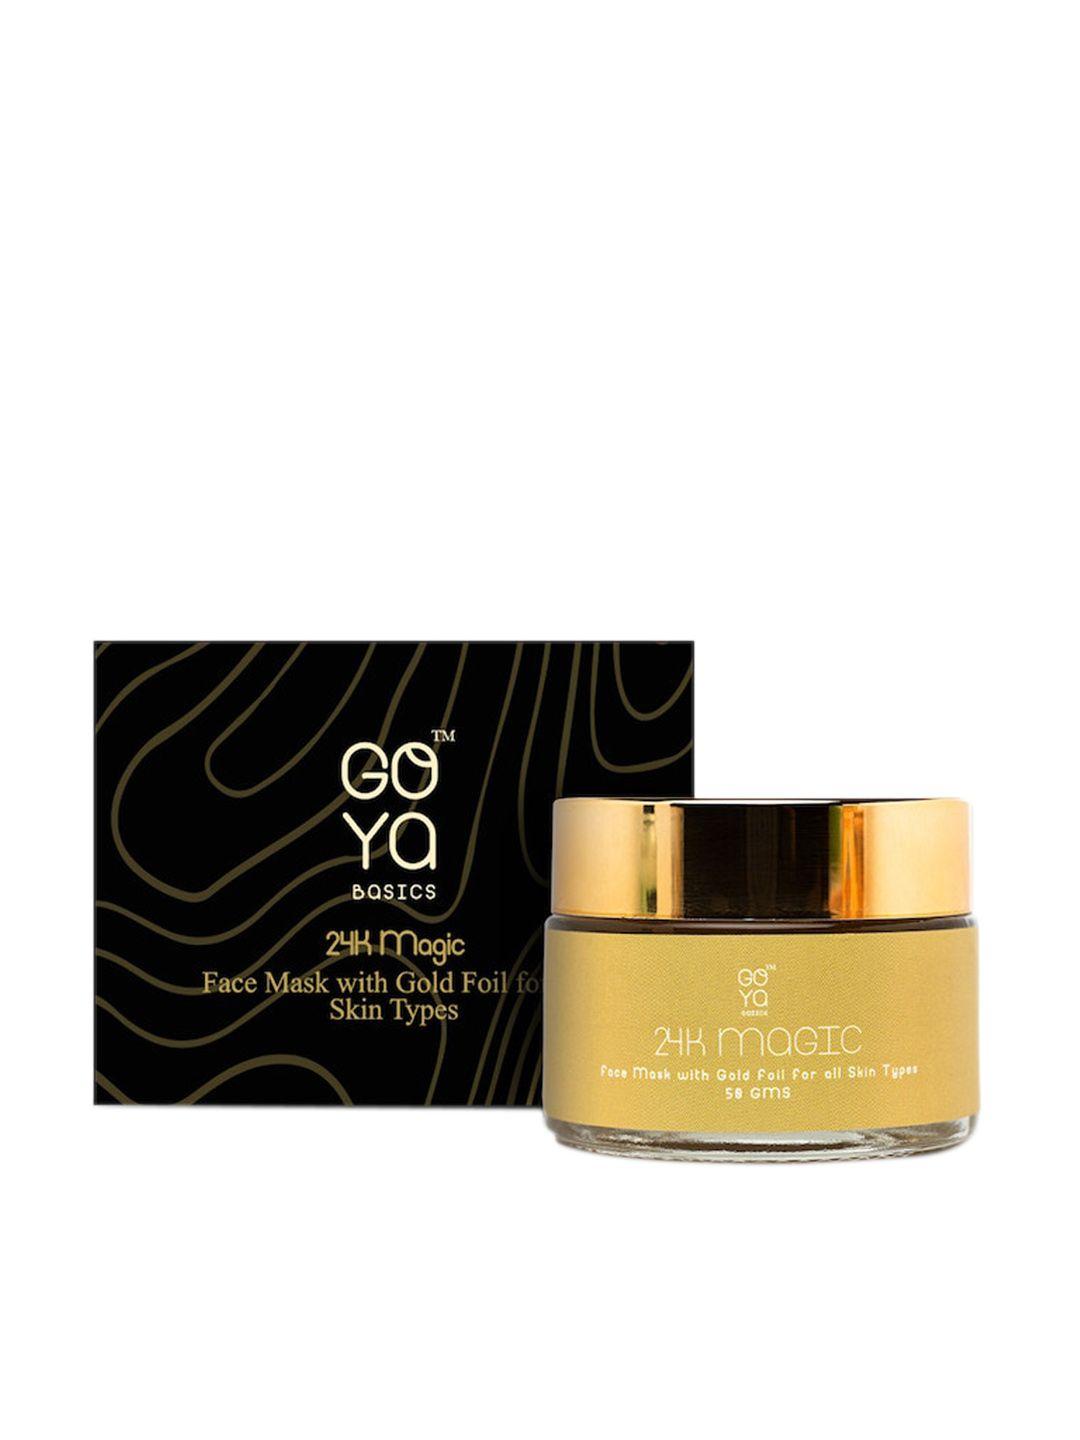 goya basics 24k magic face mask with gold foil - 50 g